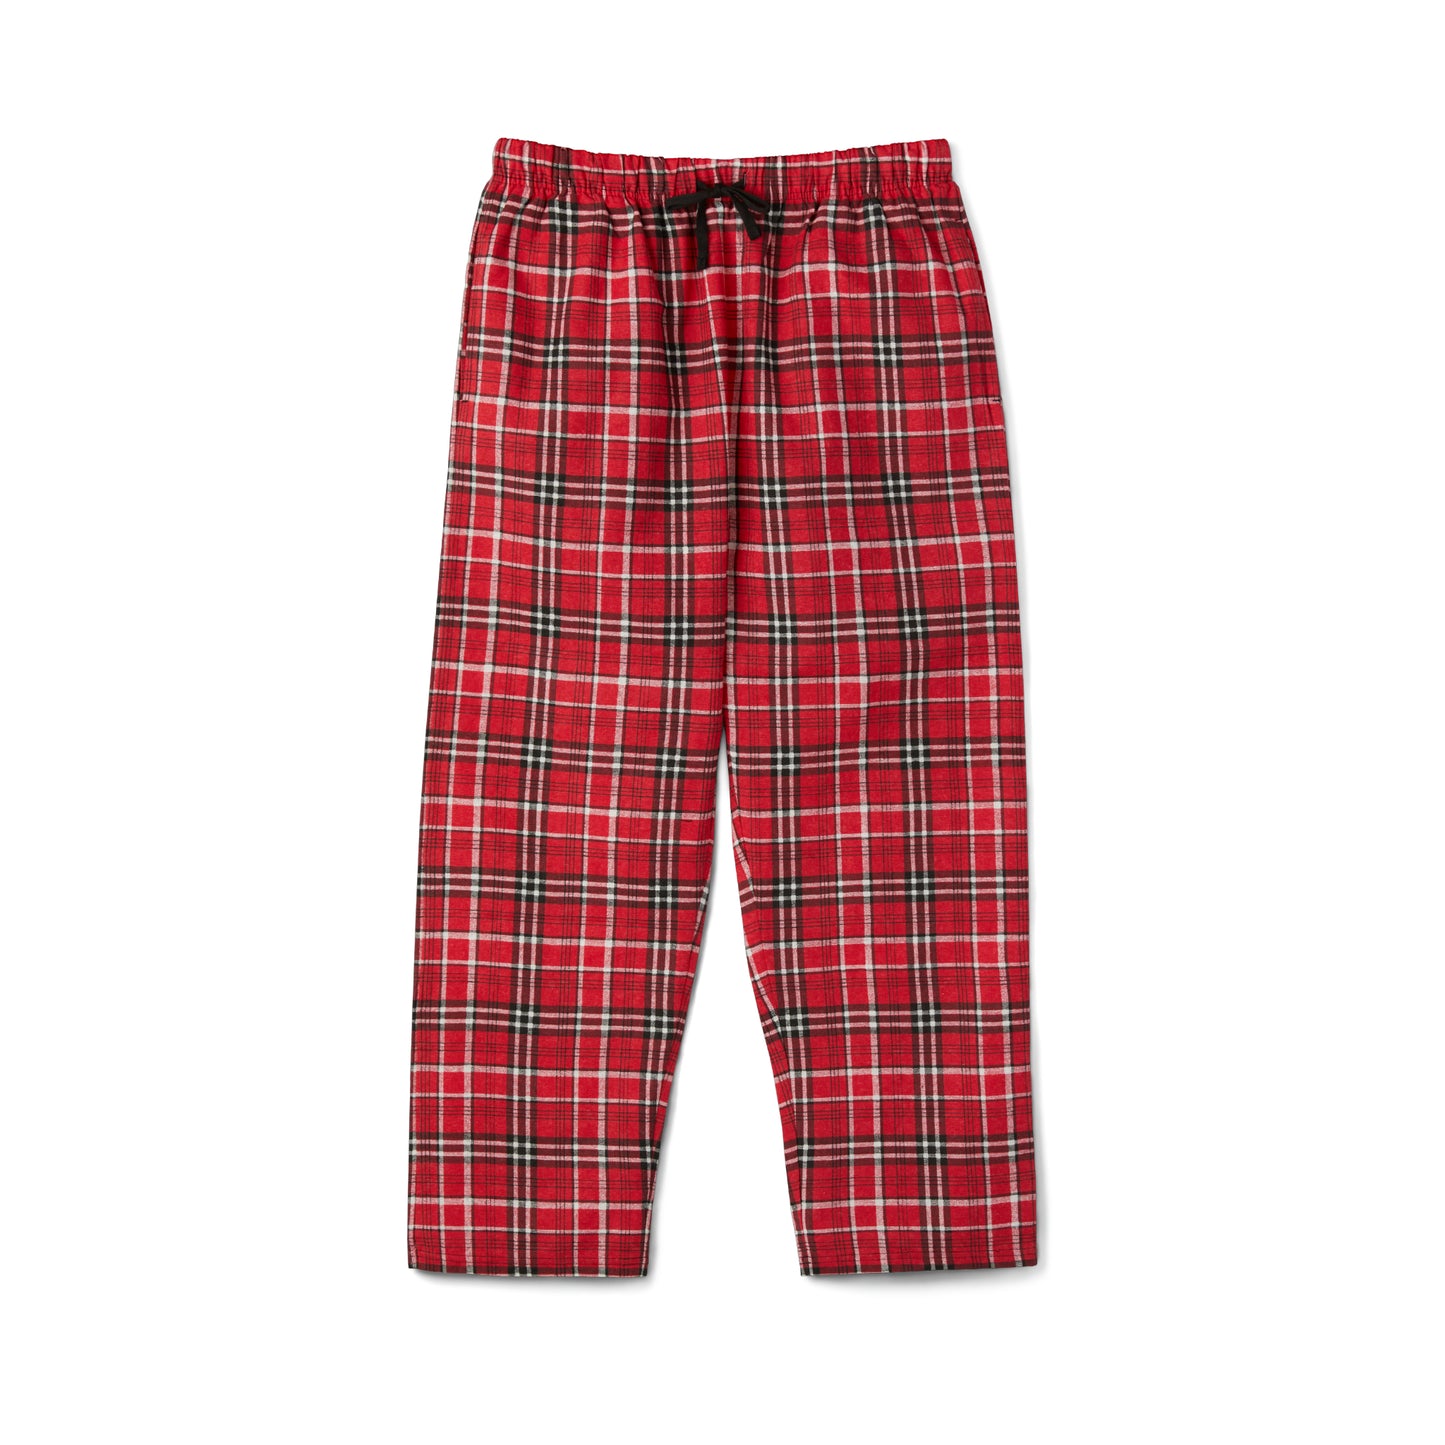 Men's Long Sleeve Pajama Set